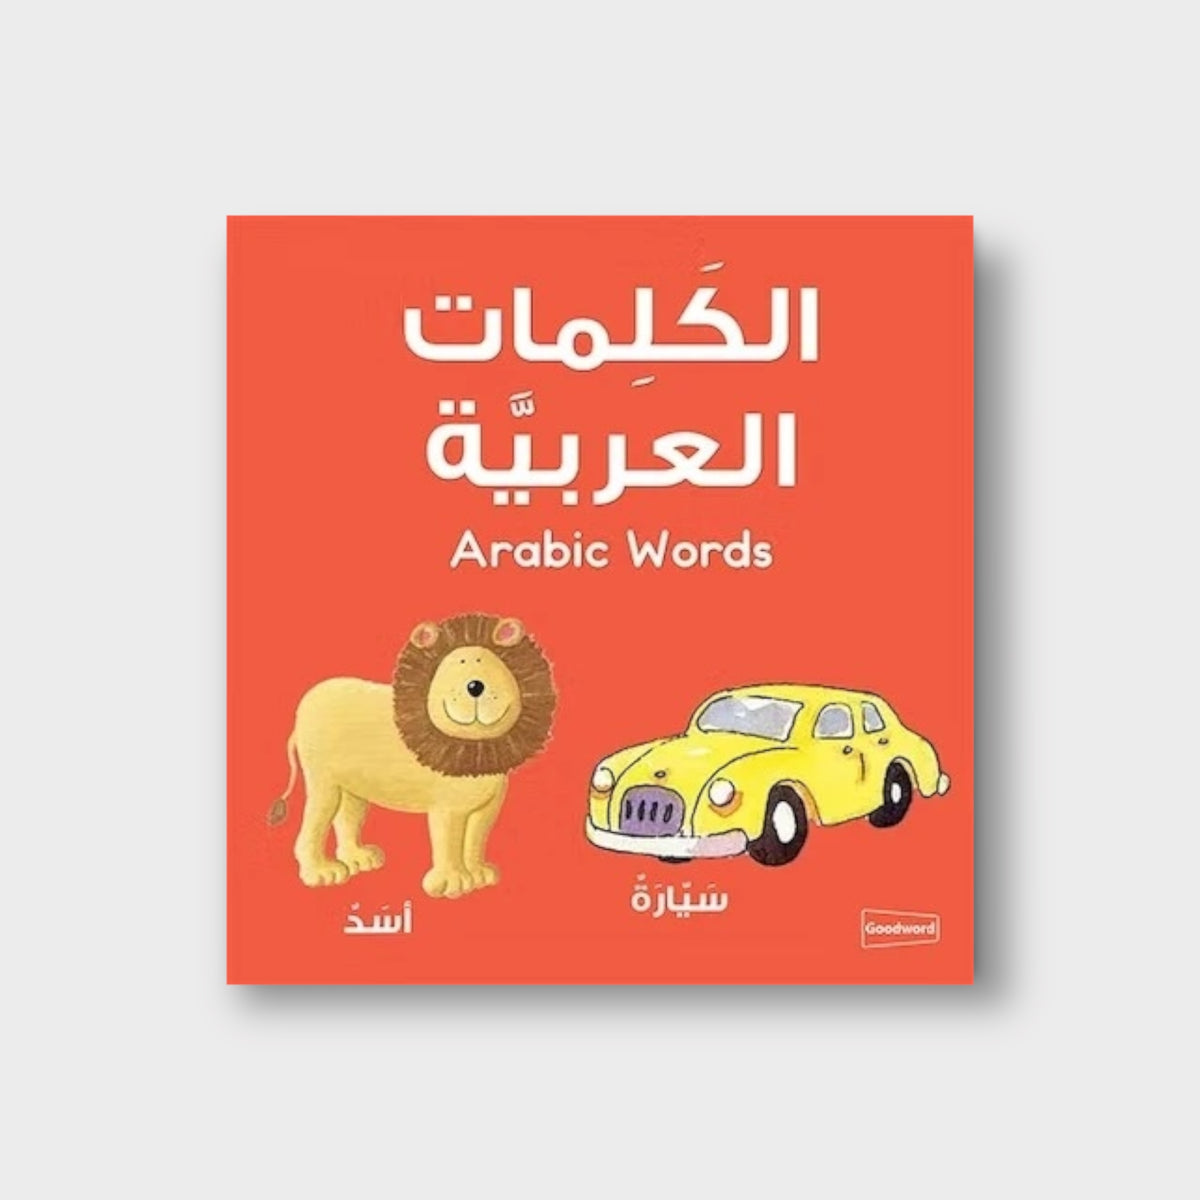 Arabic Words